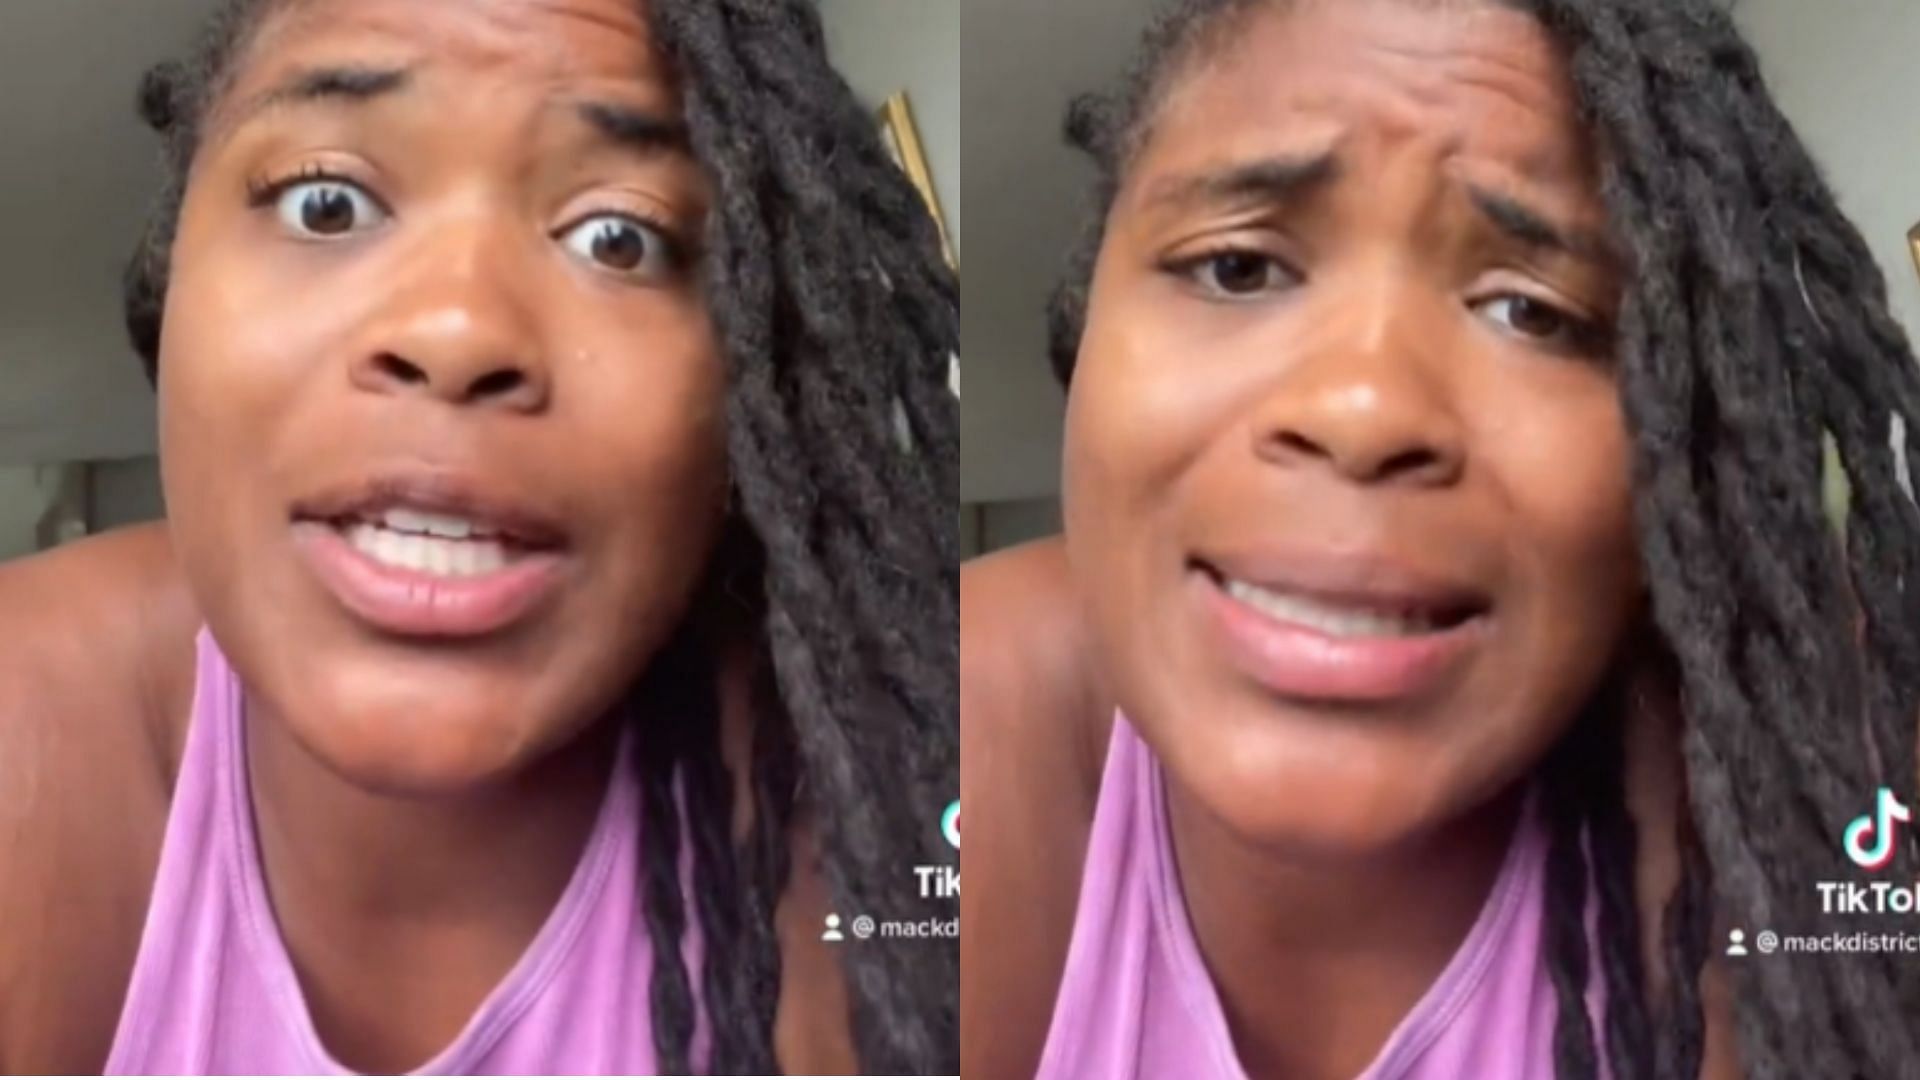 Tiara Mack responds to backlash over twerking video (Image via mackdistrict6/TikTok)